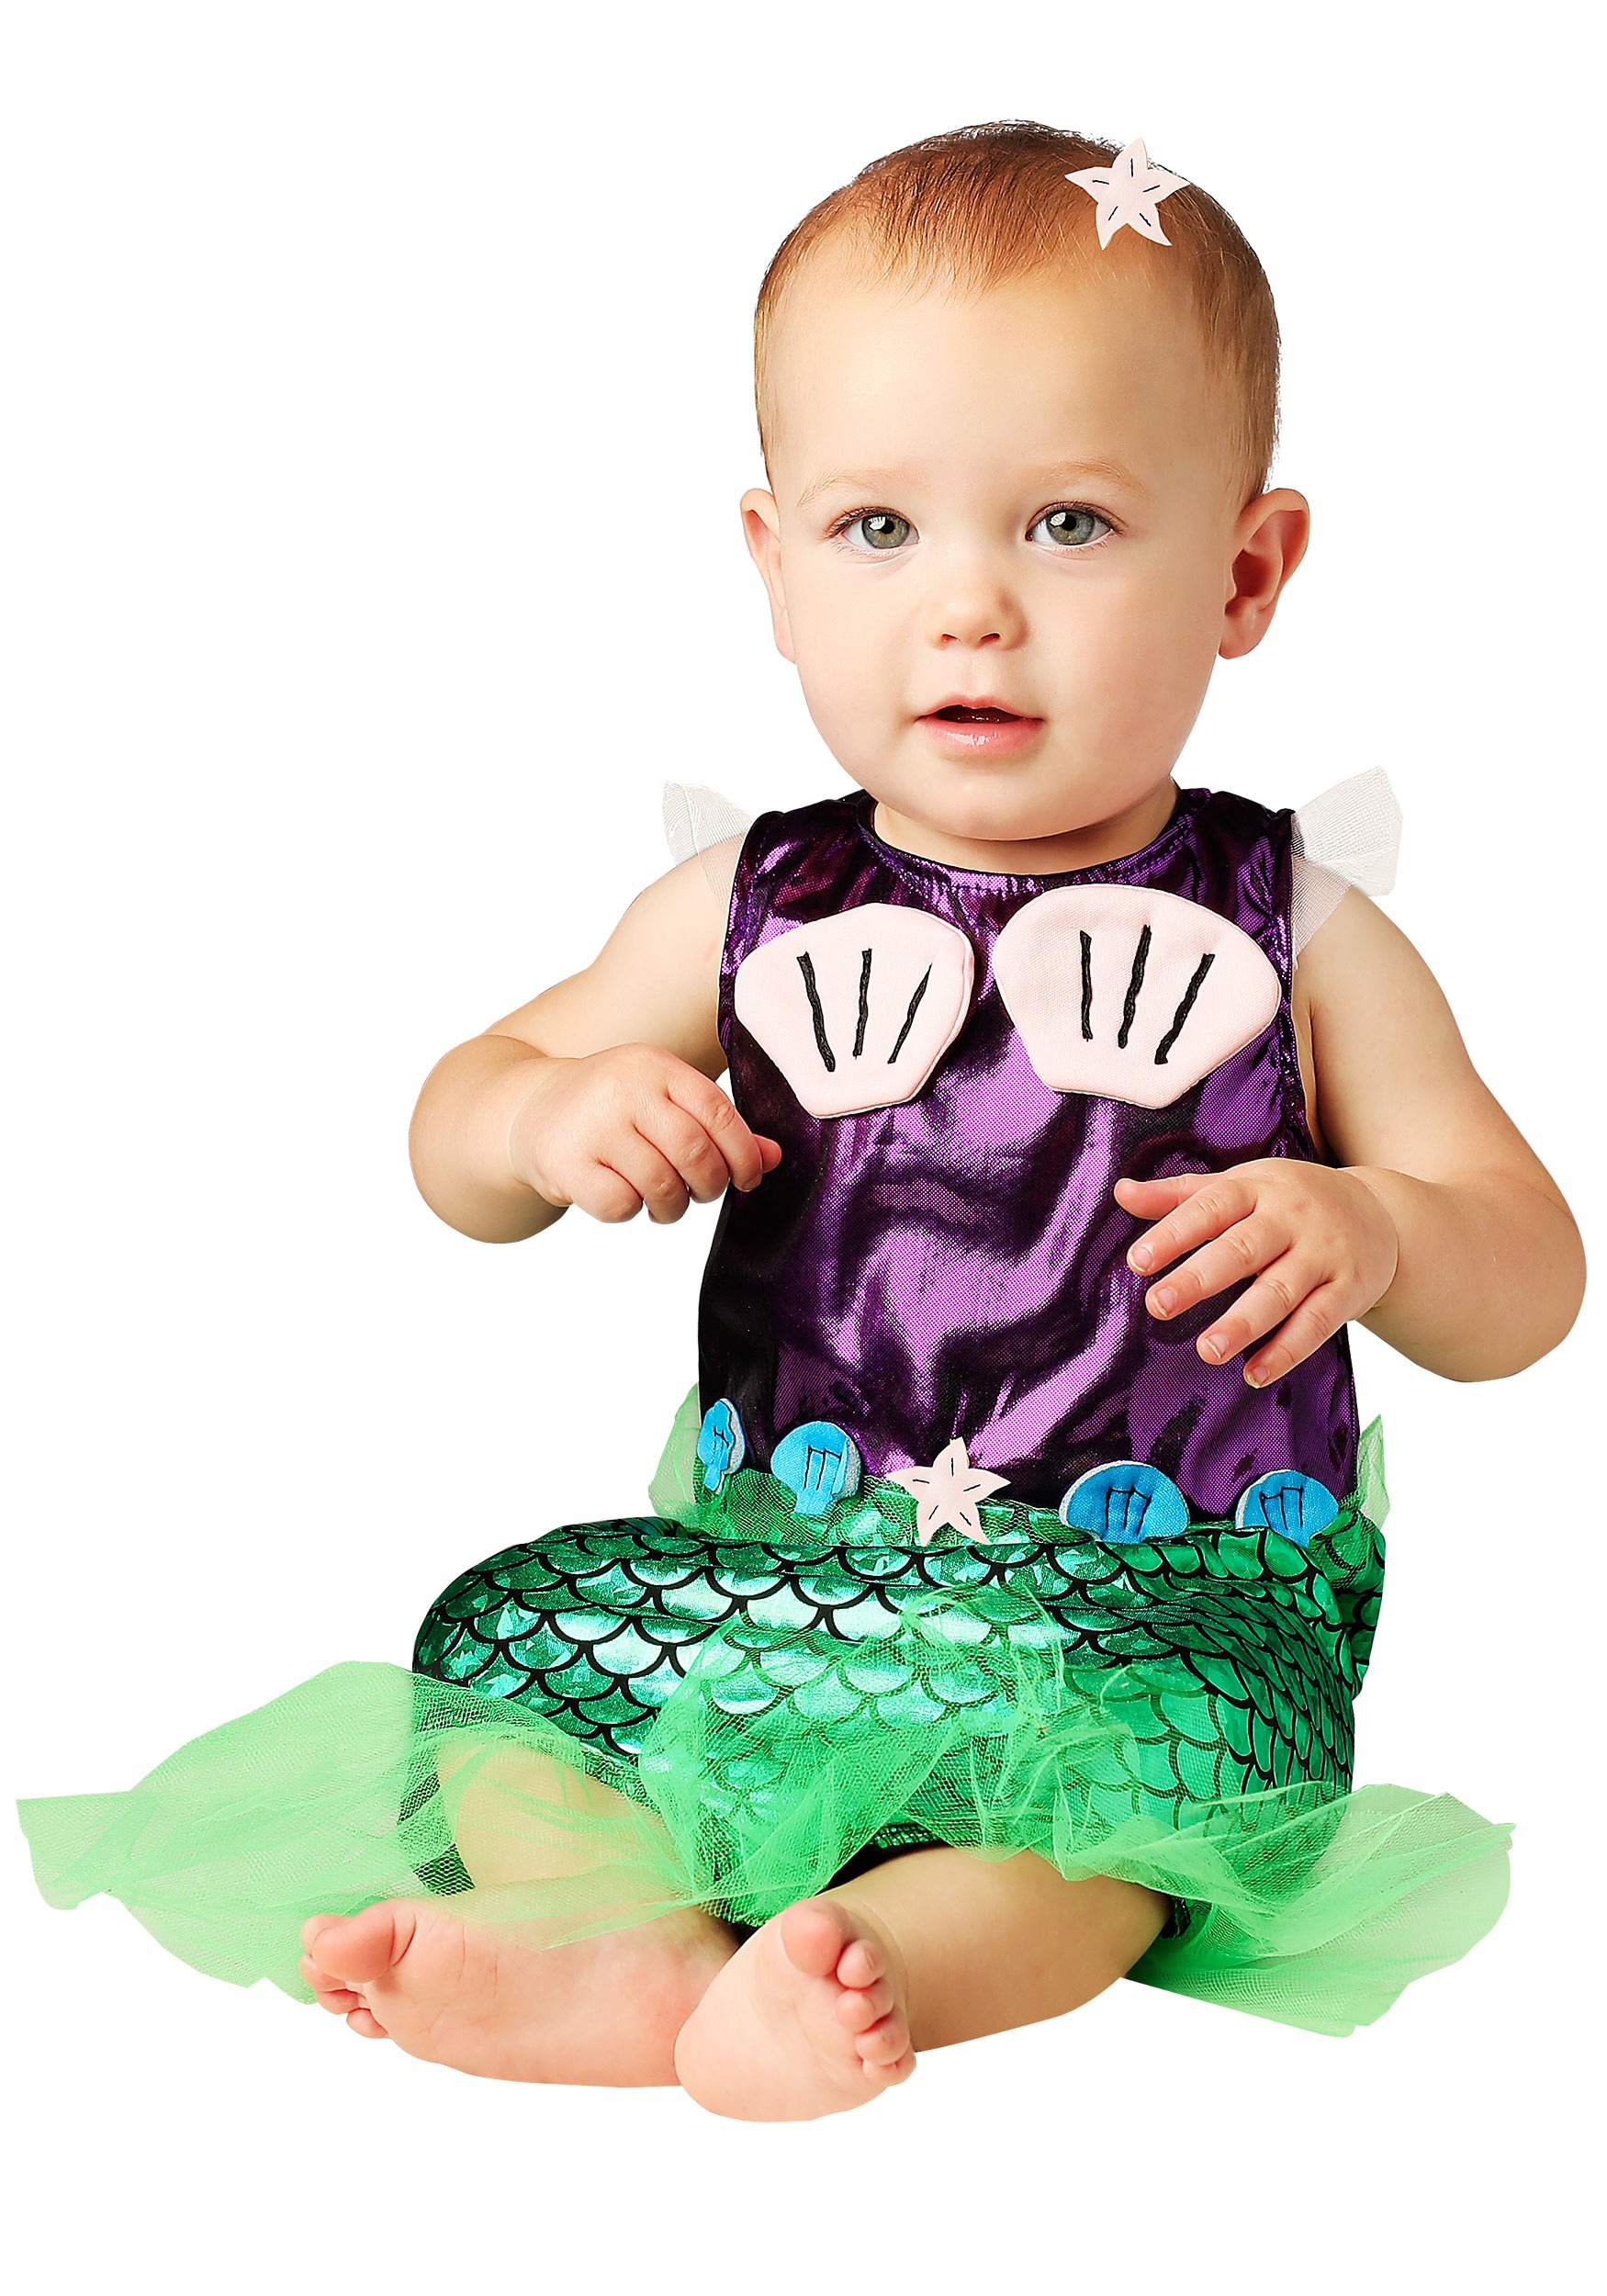 【GINGER掲載商品】 Mermaid costume for babies kids-nurie.com